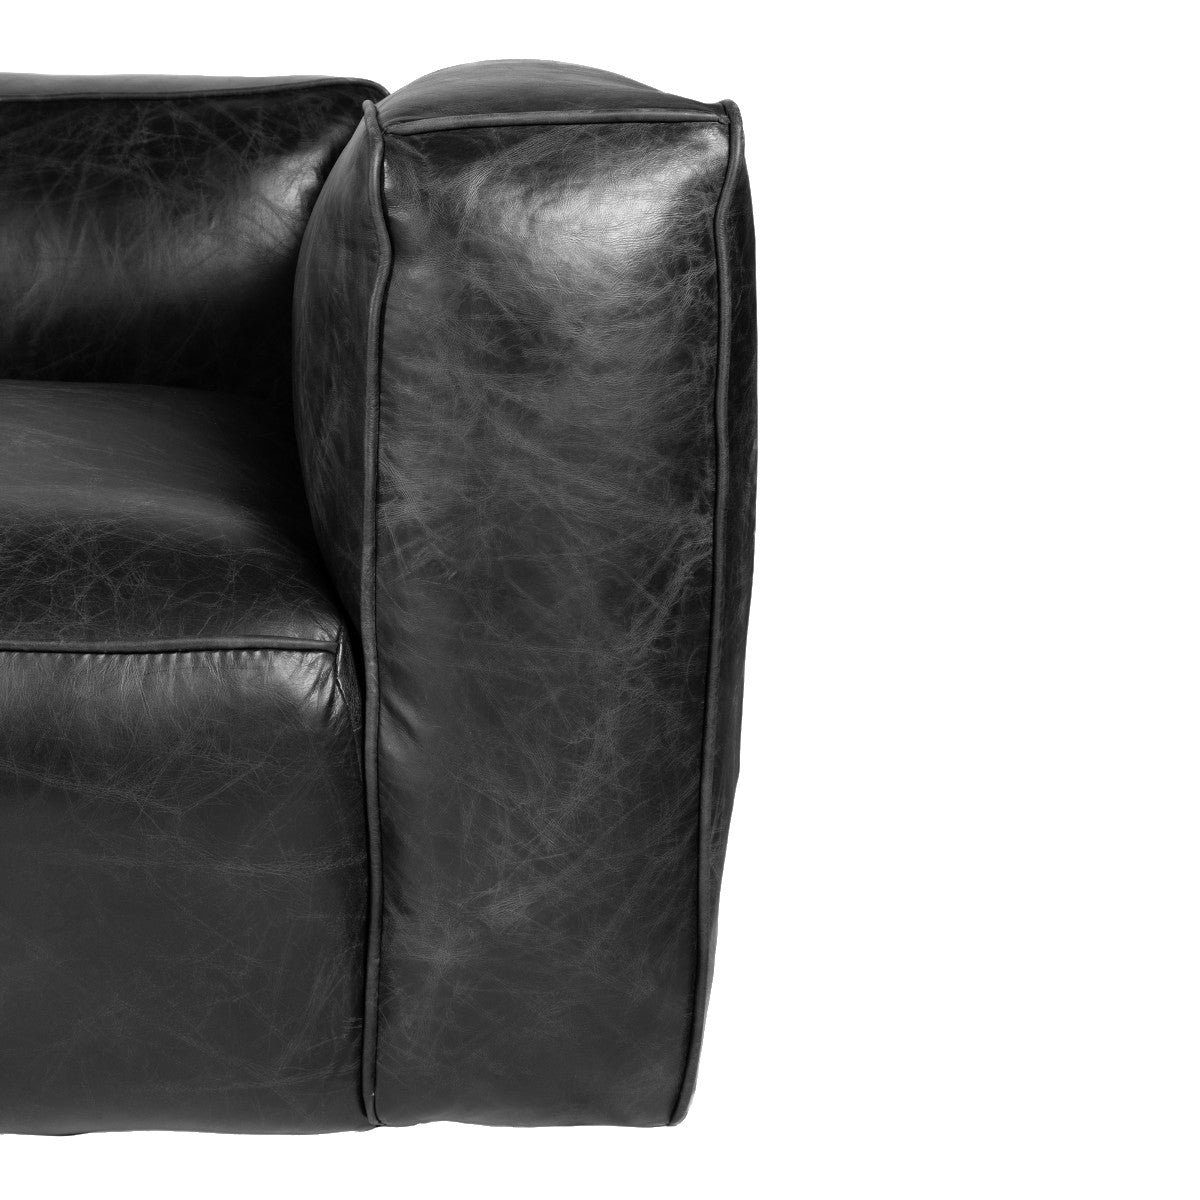 Bauhaus Vintage Black Leather Sofa